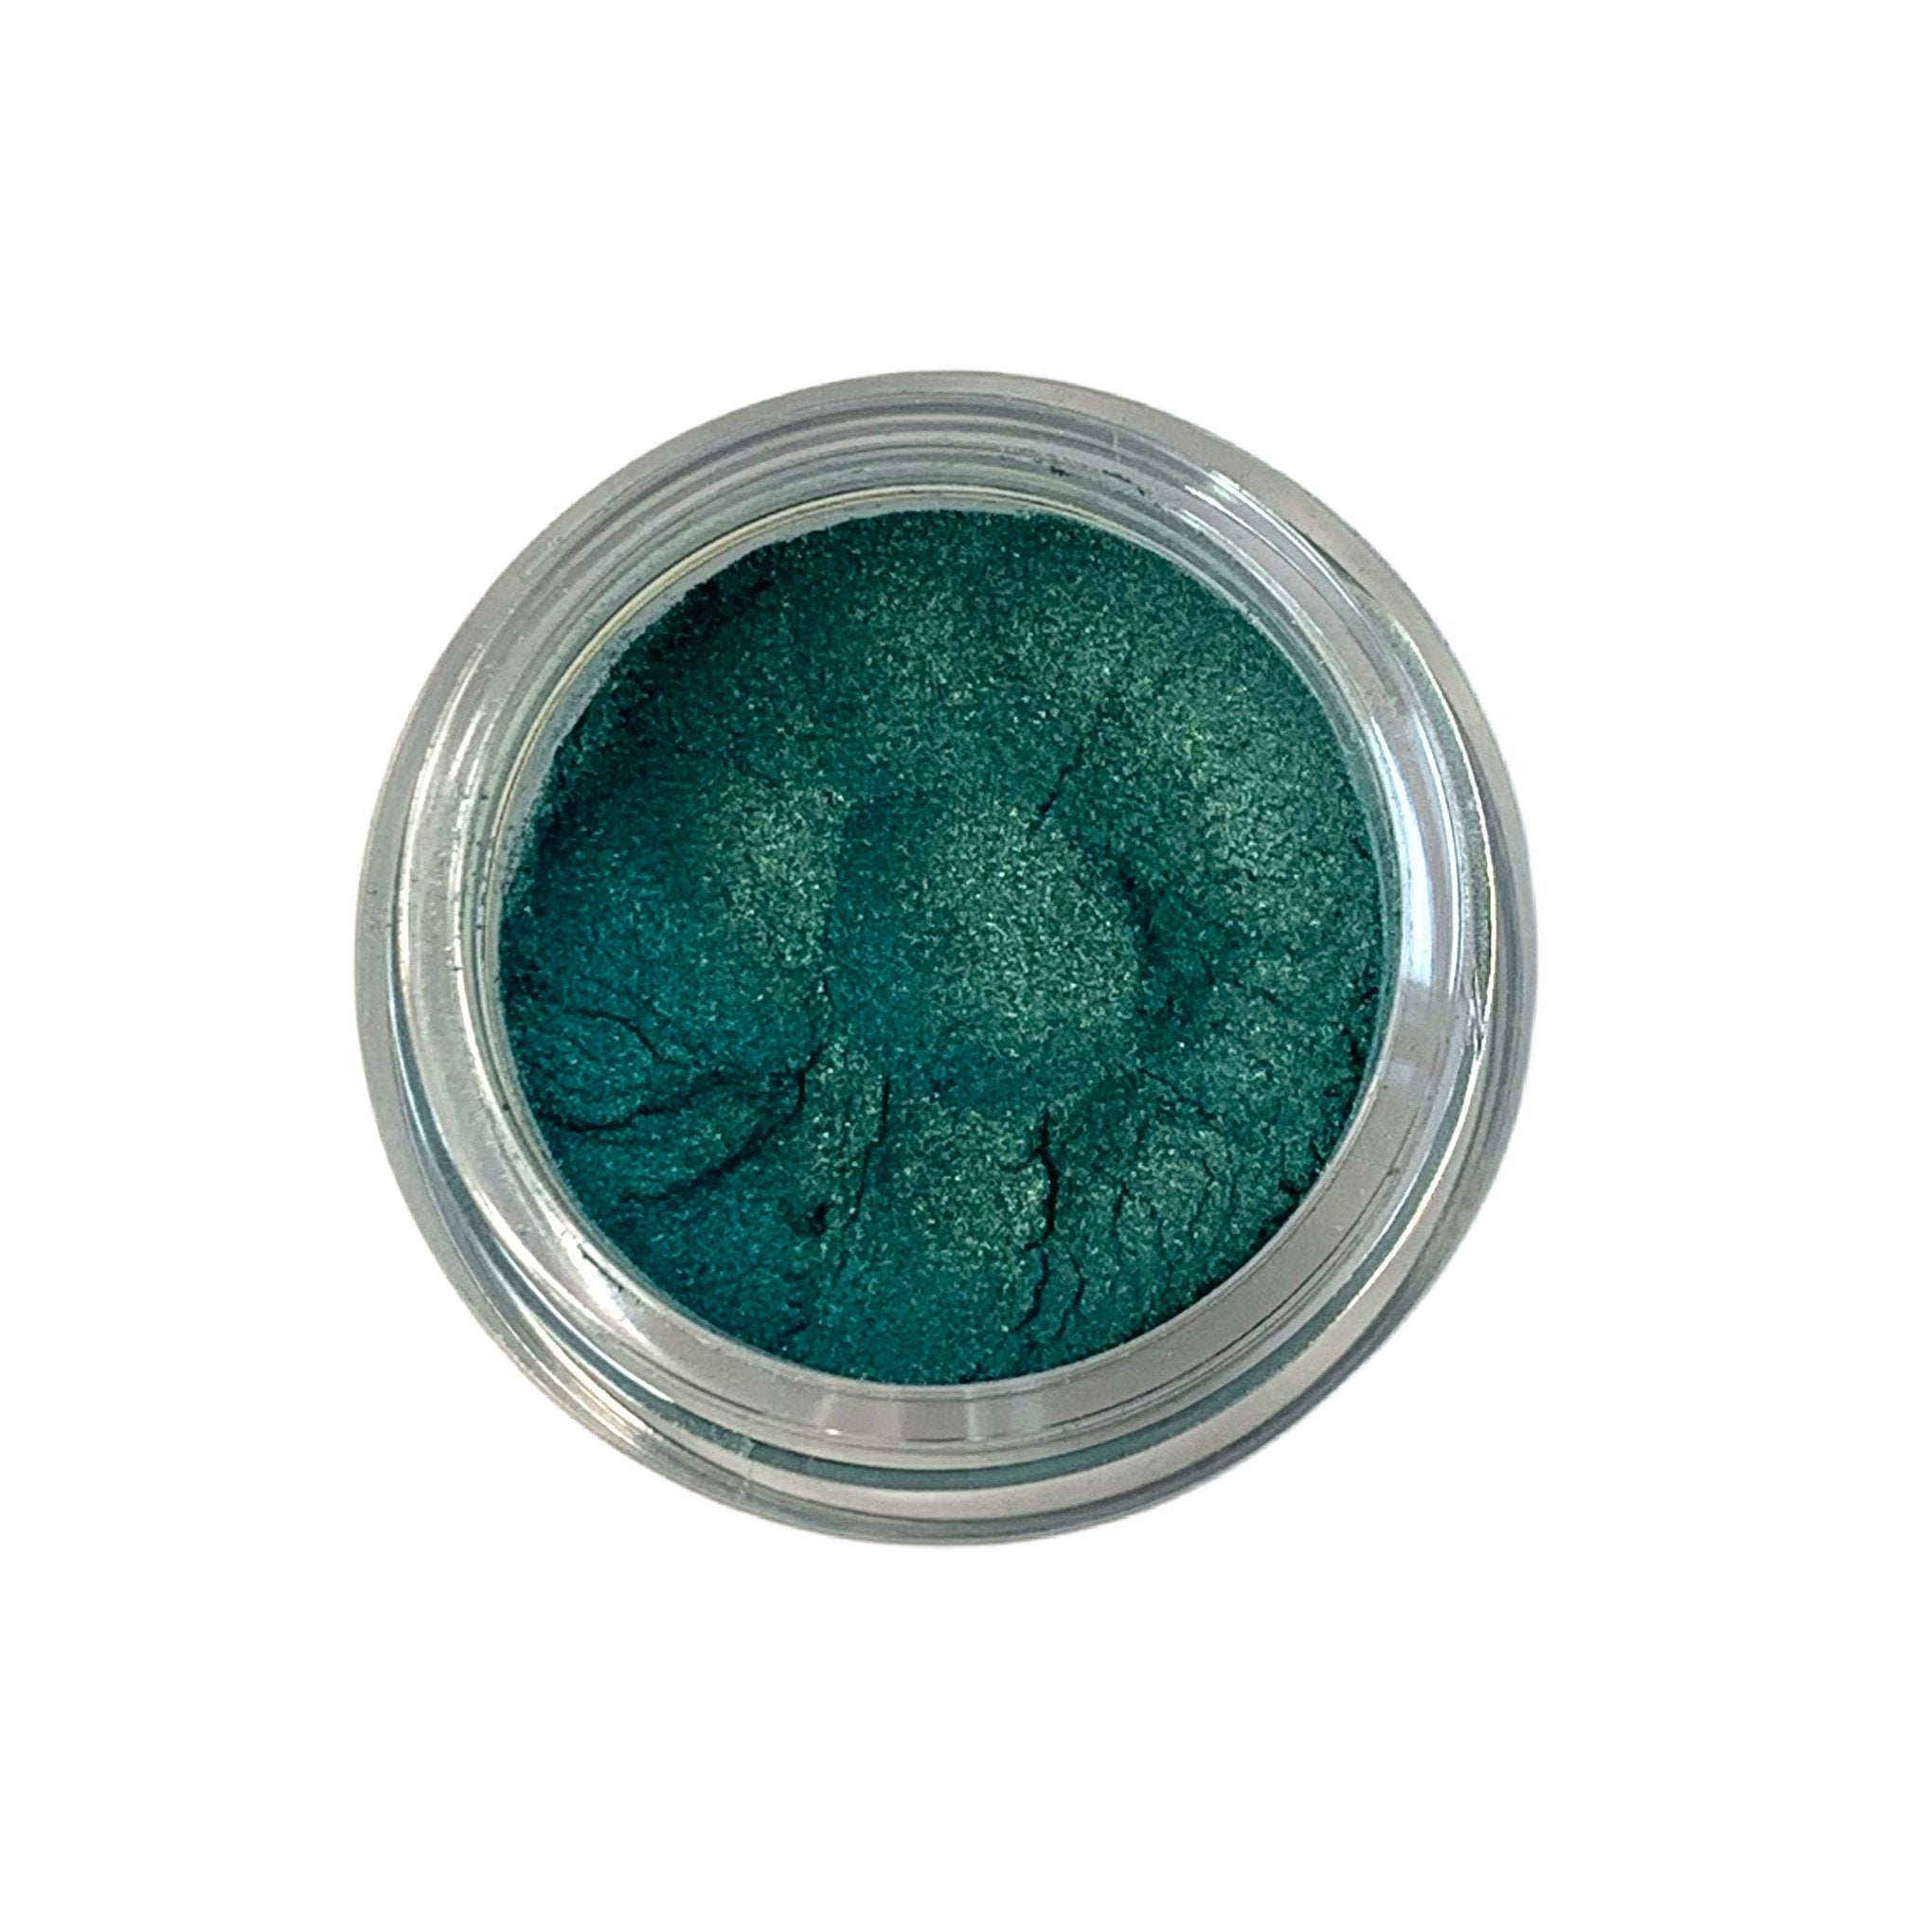 deepwater - a dark greenish blue loose mineral eyeshadow. comes in 10gram sifter jar, vegan and cruelty free.